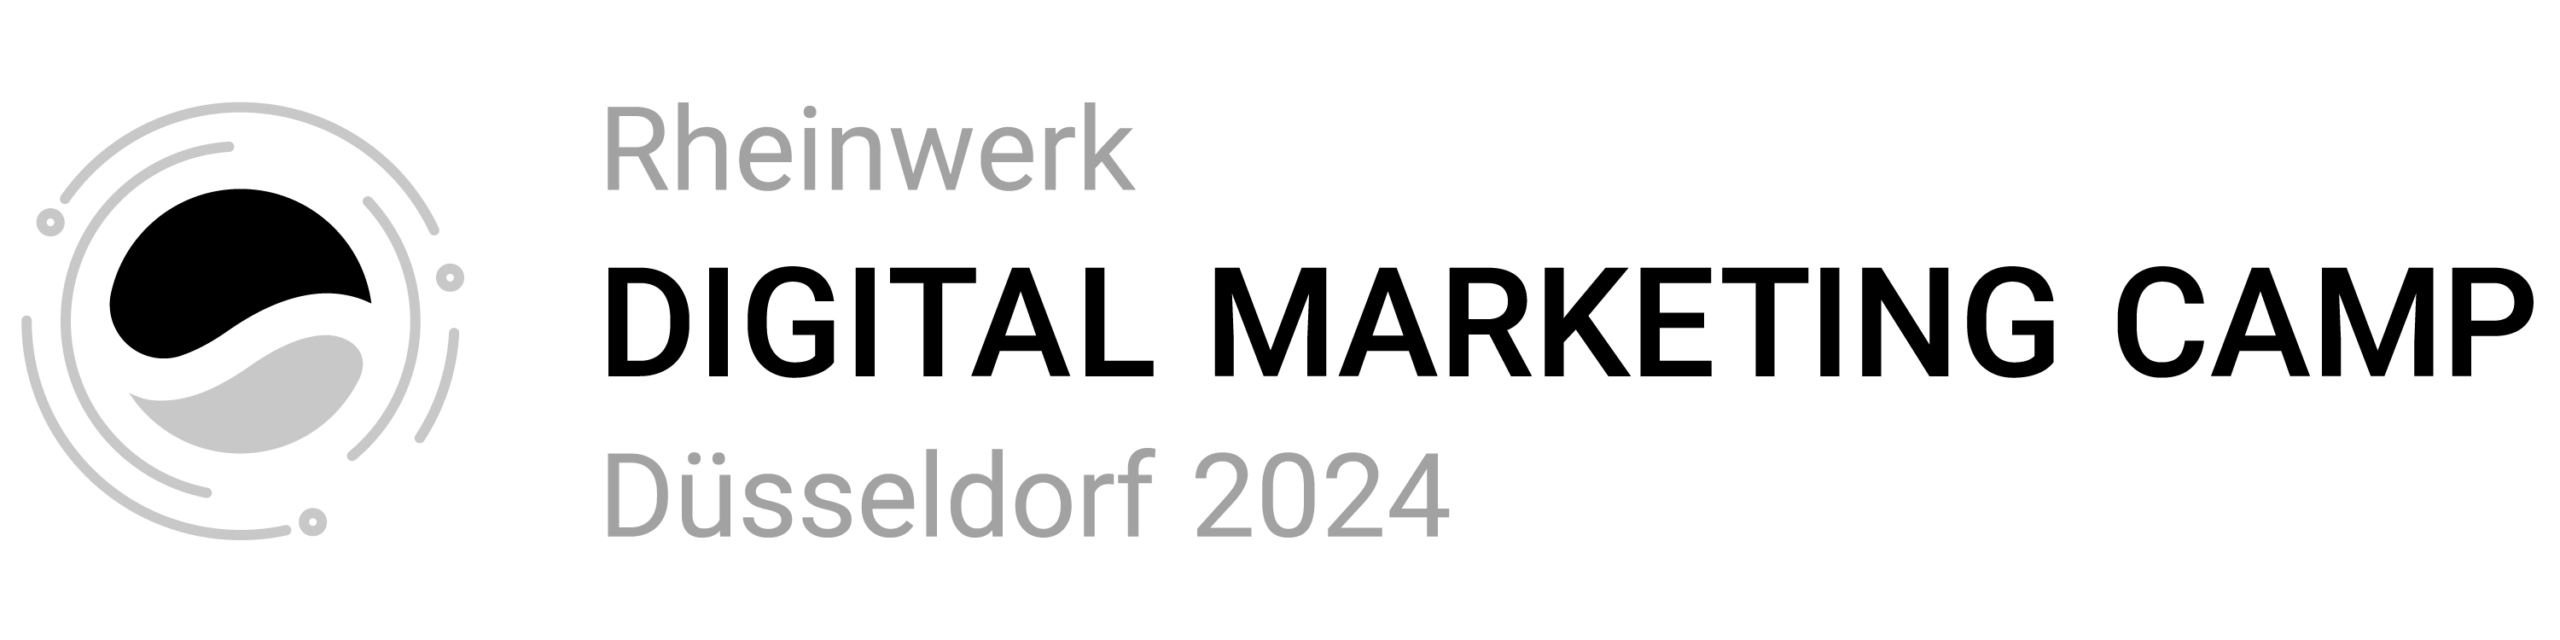 Banner Digital Marketing Camp Rheinwerk Verlag Düsseldorf 2024